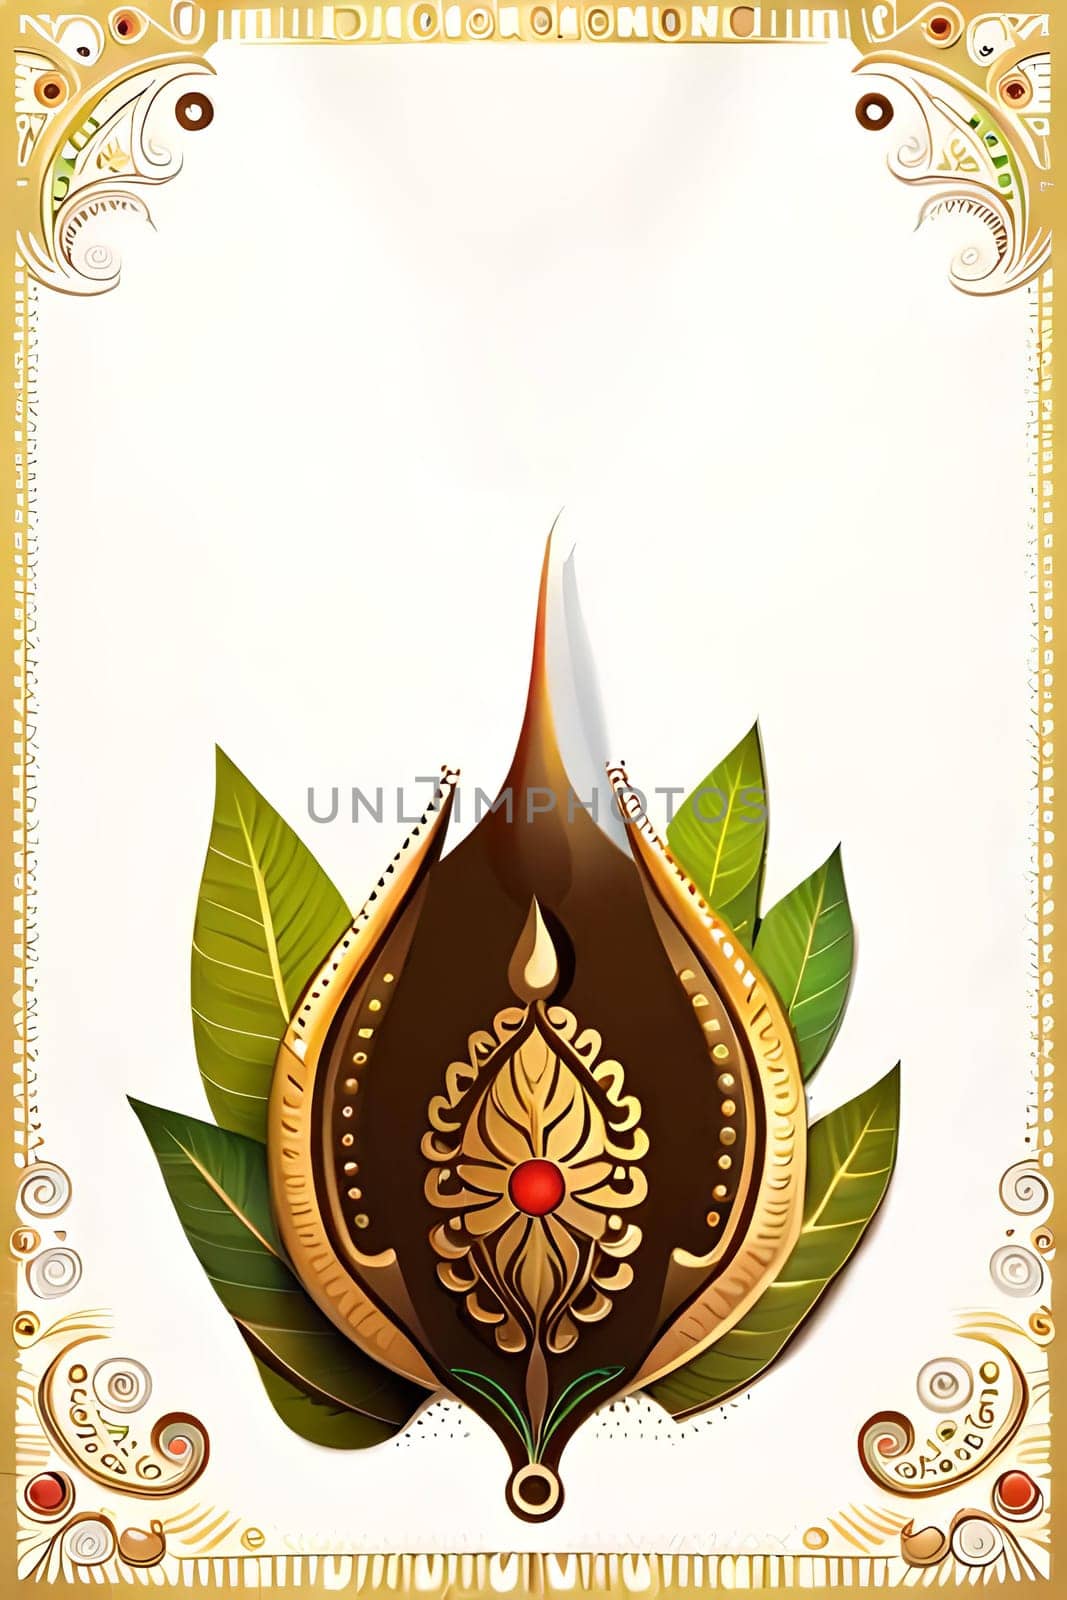 Happy ugadi greeting card background with kalash. Happy Ugadi holiday composition - Hindu New Year festival. Decorated Kalash with coconut, flowers, mango leaves and diya.